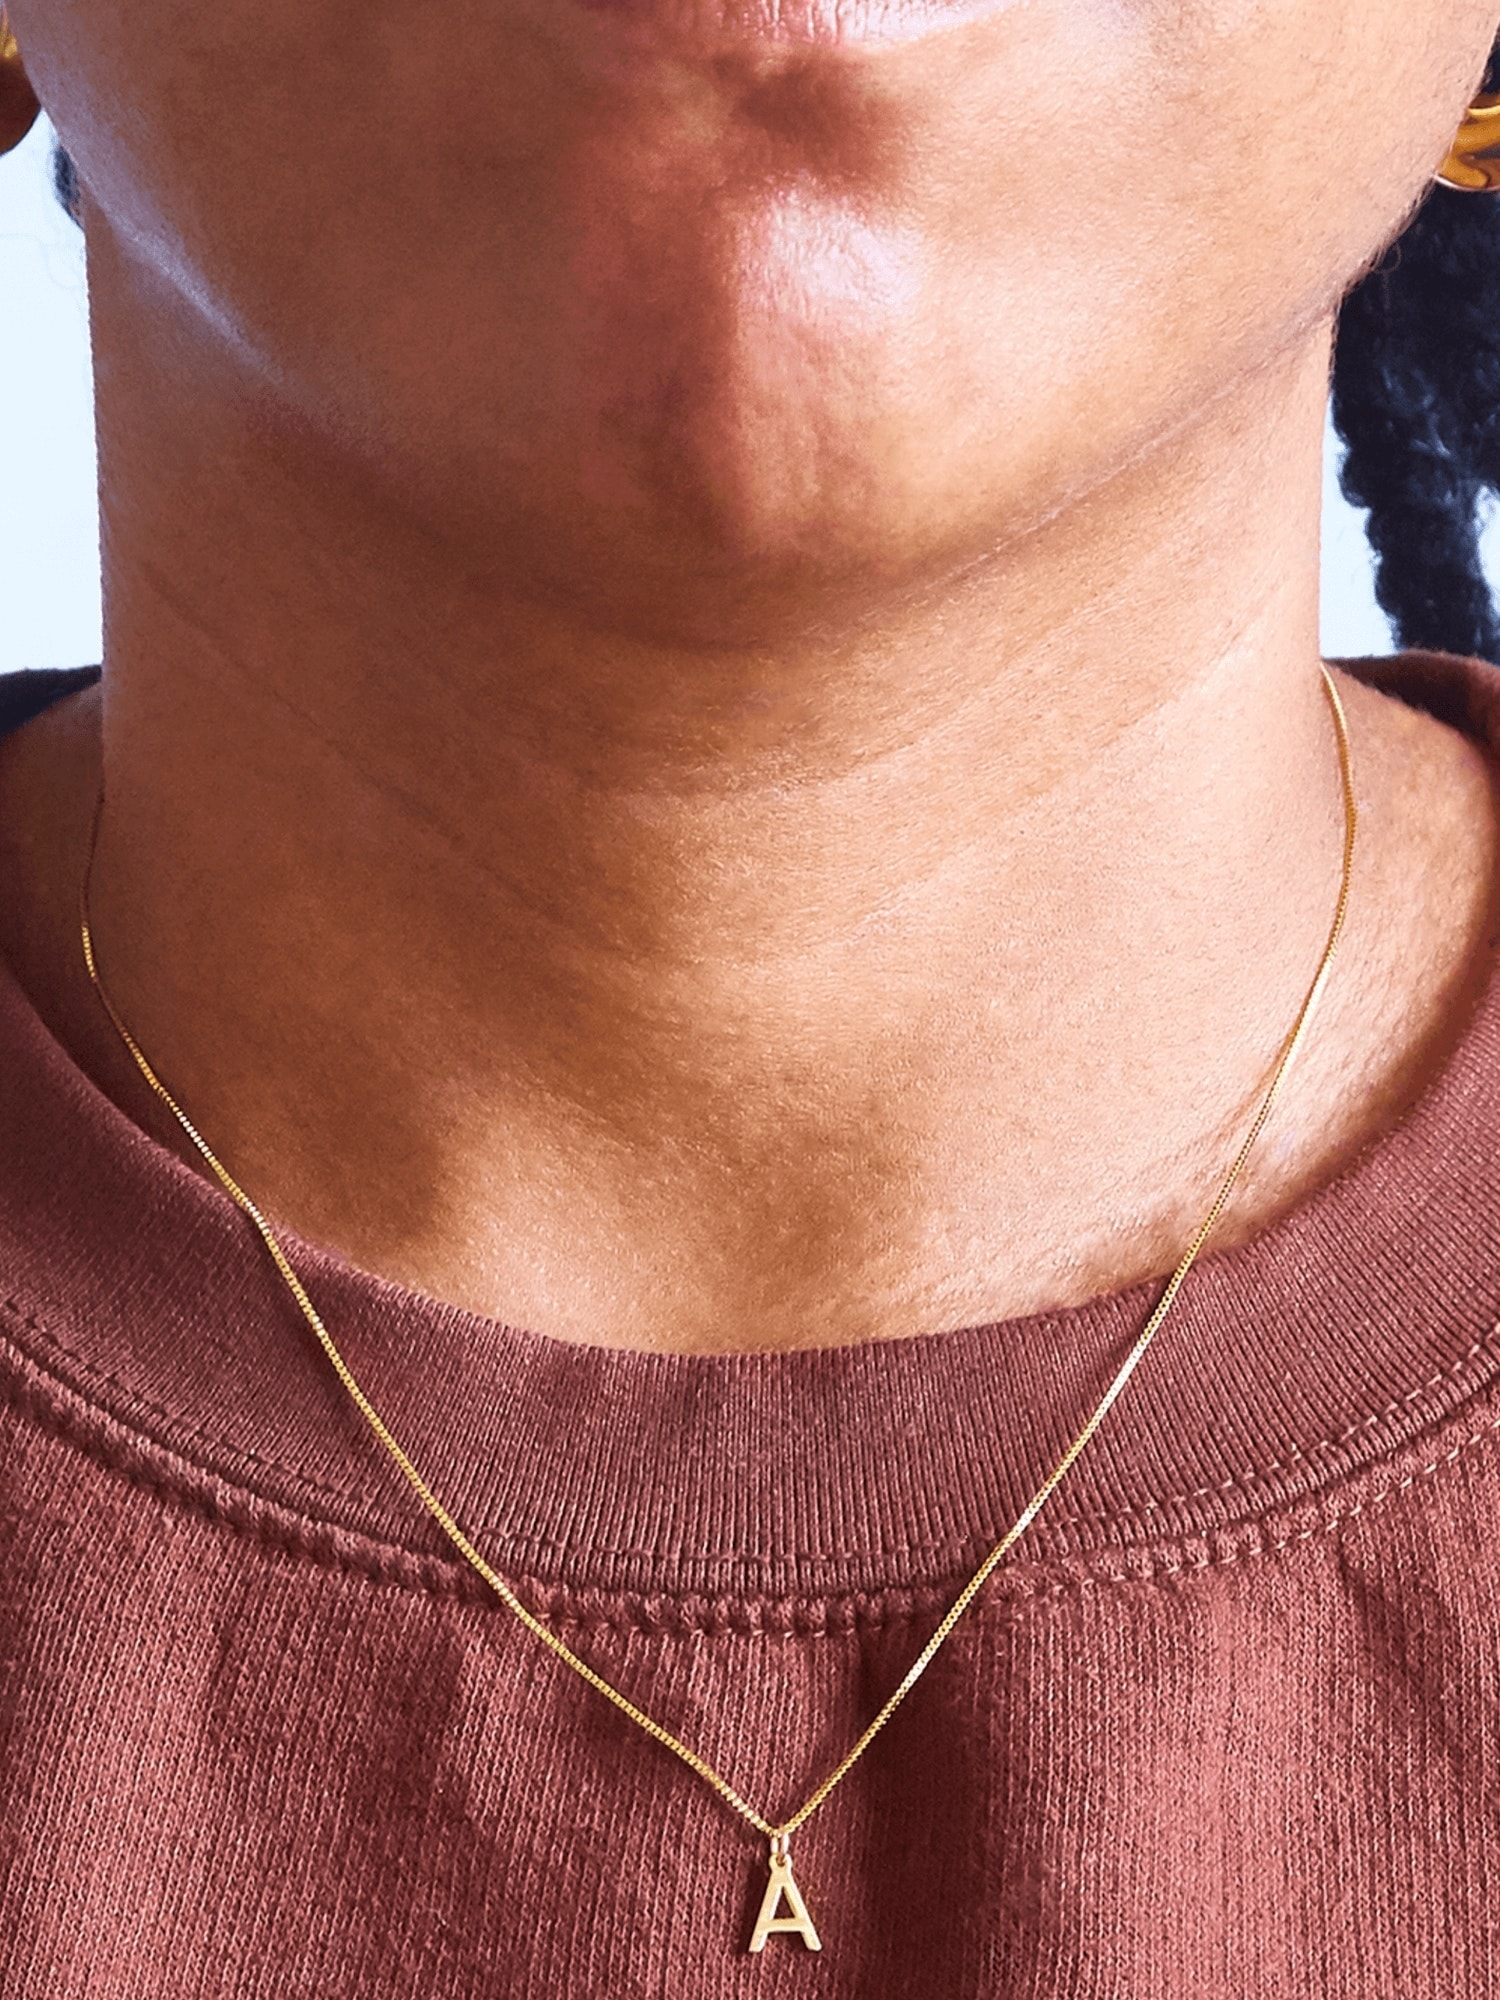 Chloé Alphabet Gold-Tone Rose Quartz Necklace - One Size